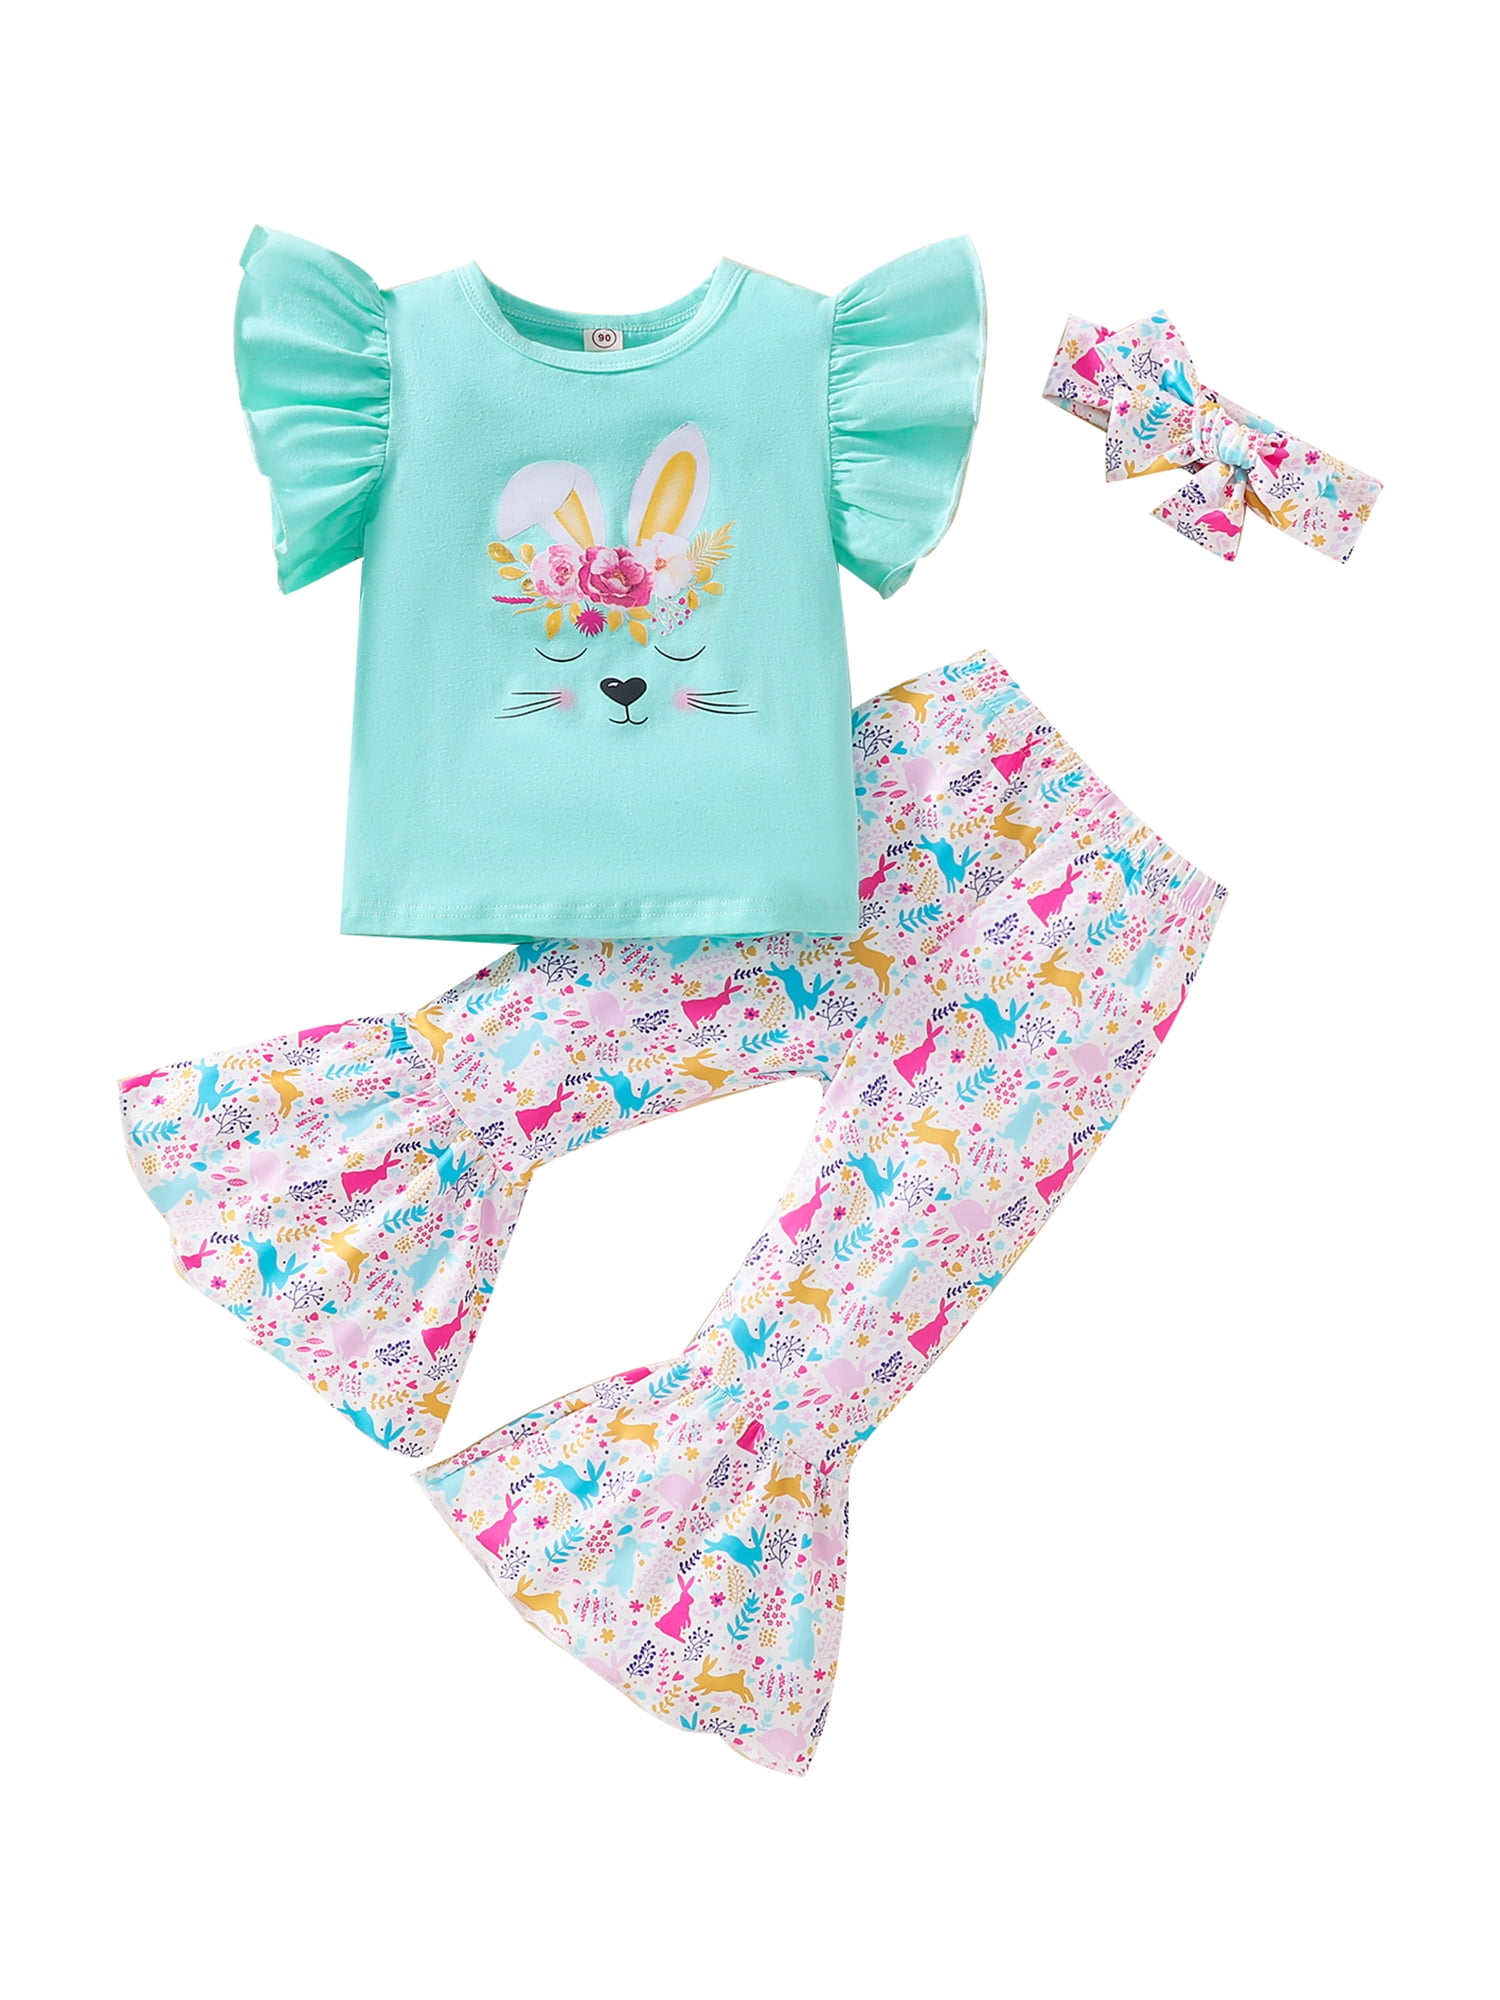 2PCS Toddler Kids Baby Girl Short Sleeve T-Shirt Tops Blouse+Pants Bunny Outfits 